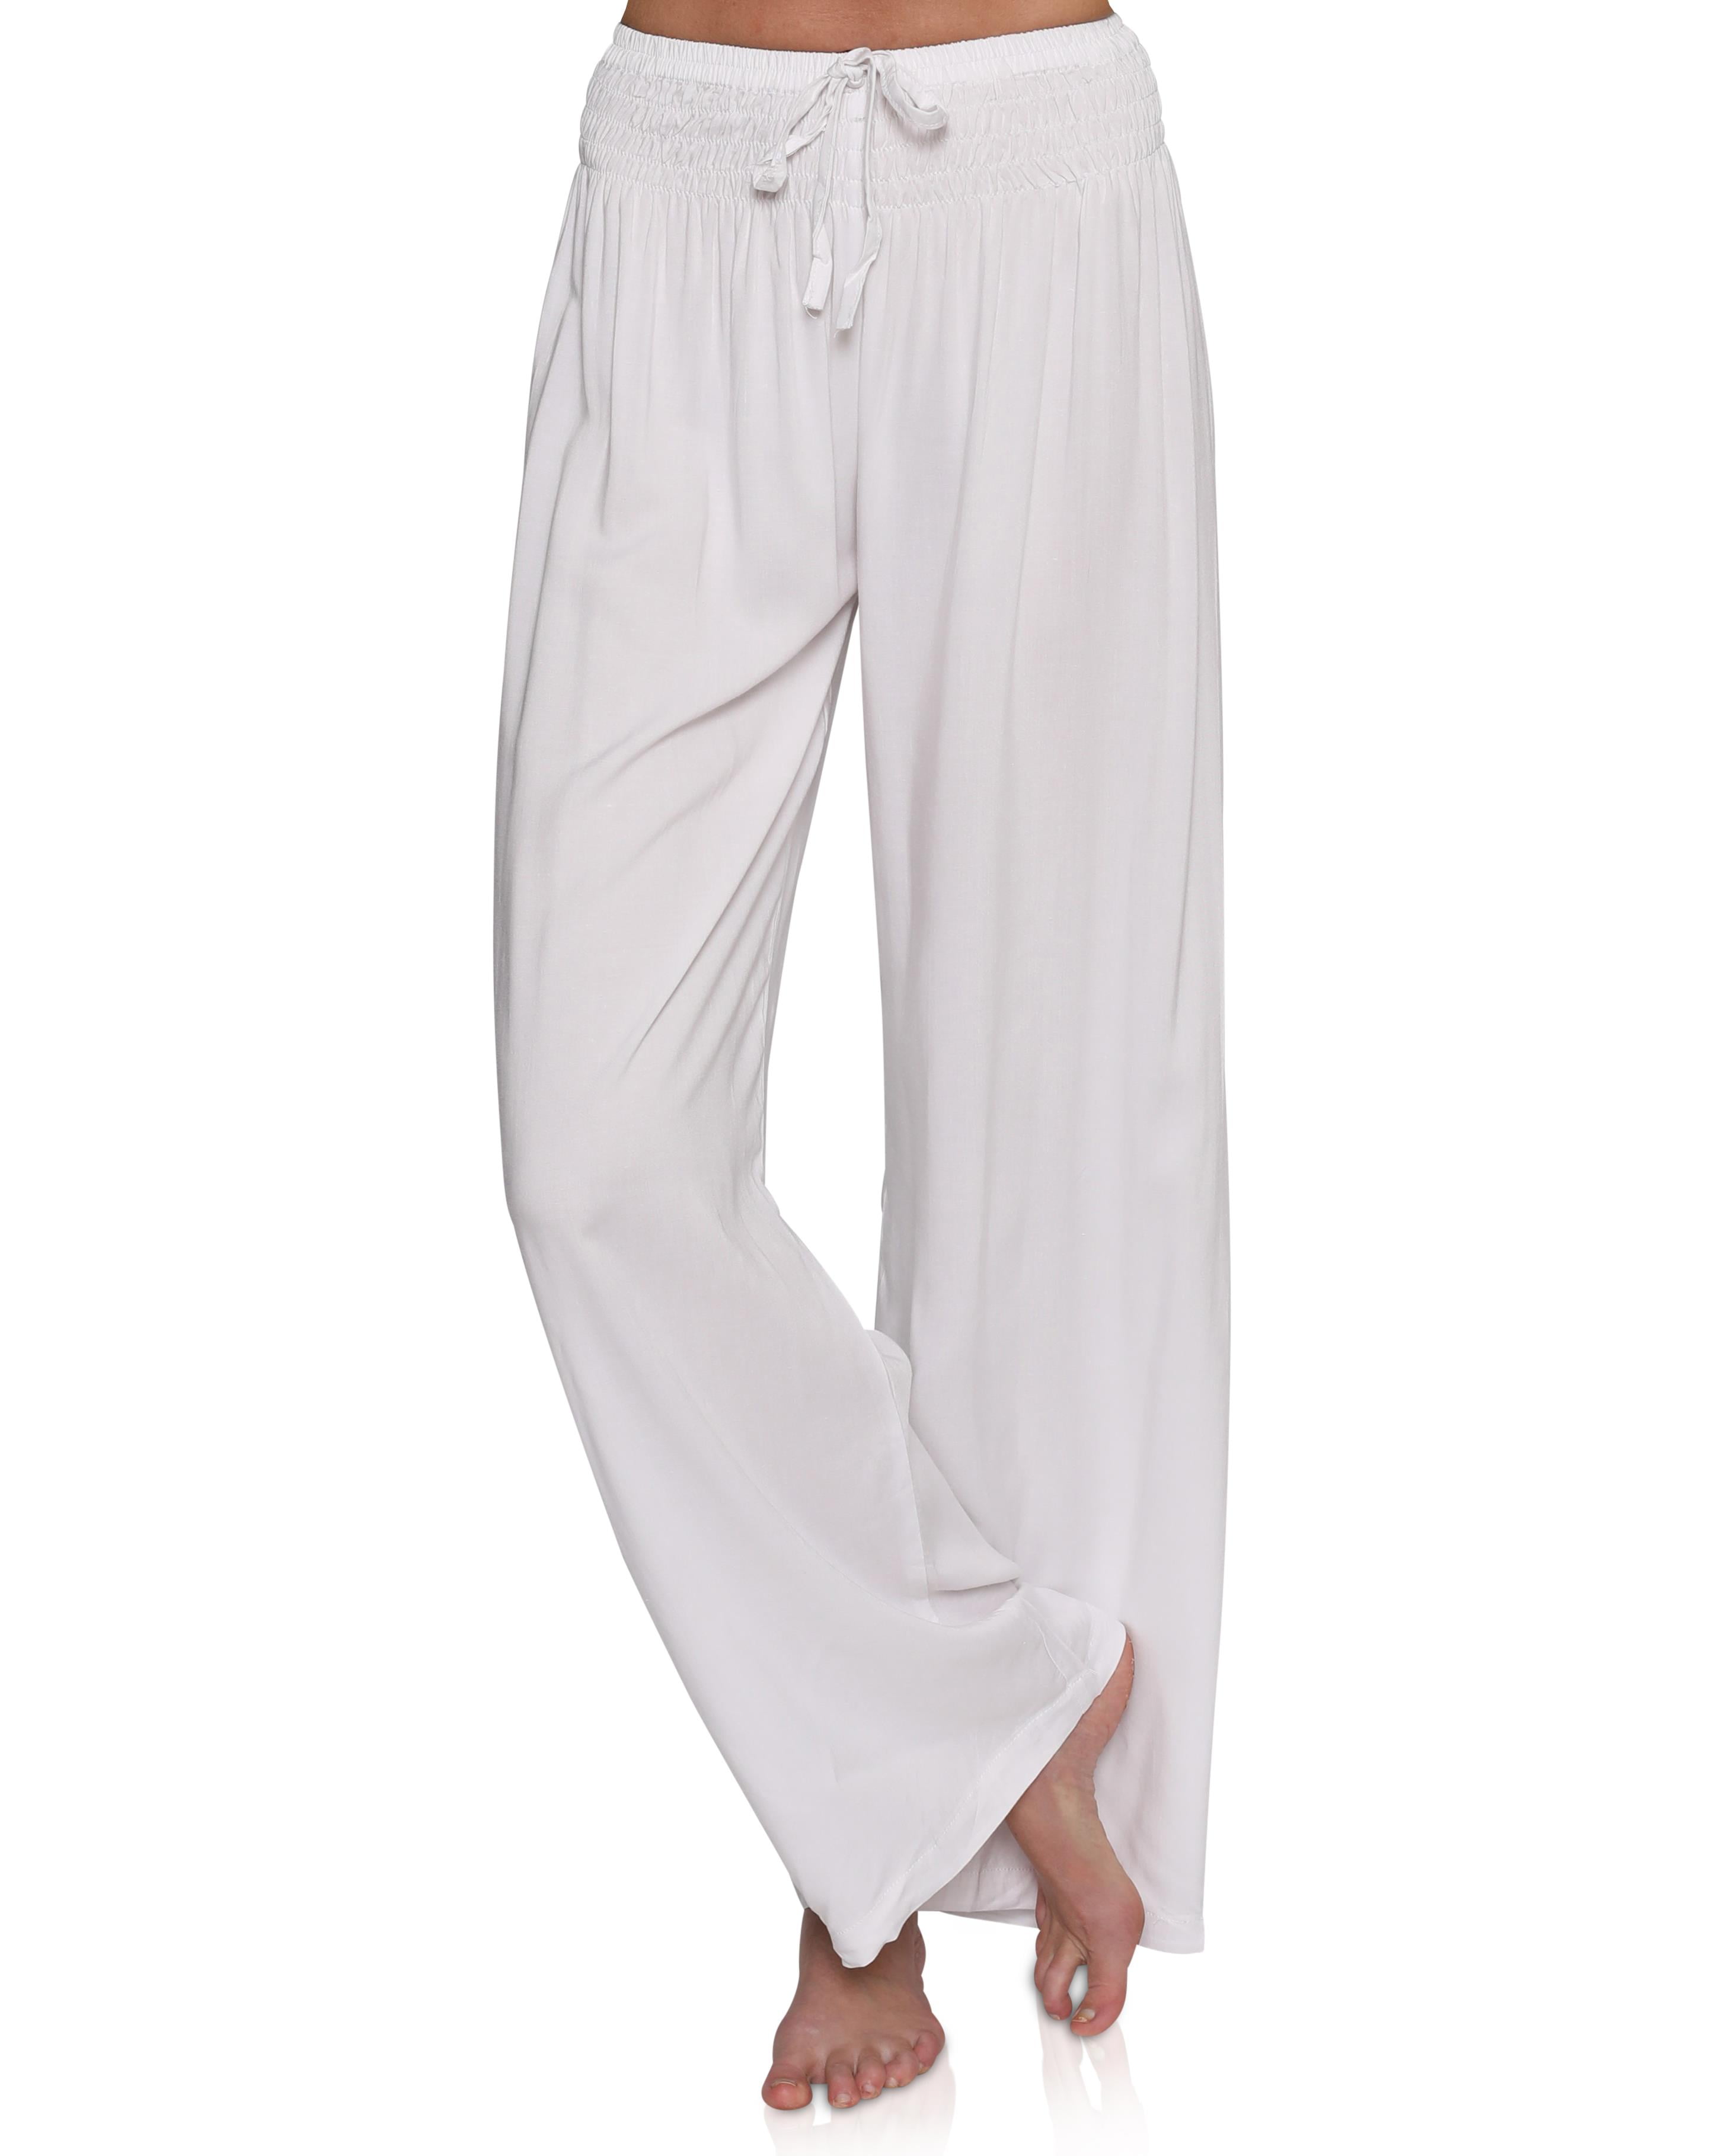 White Bamboo Rayon Flowy Yoga Pants